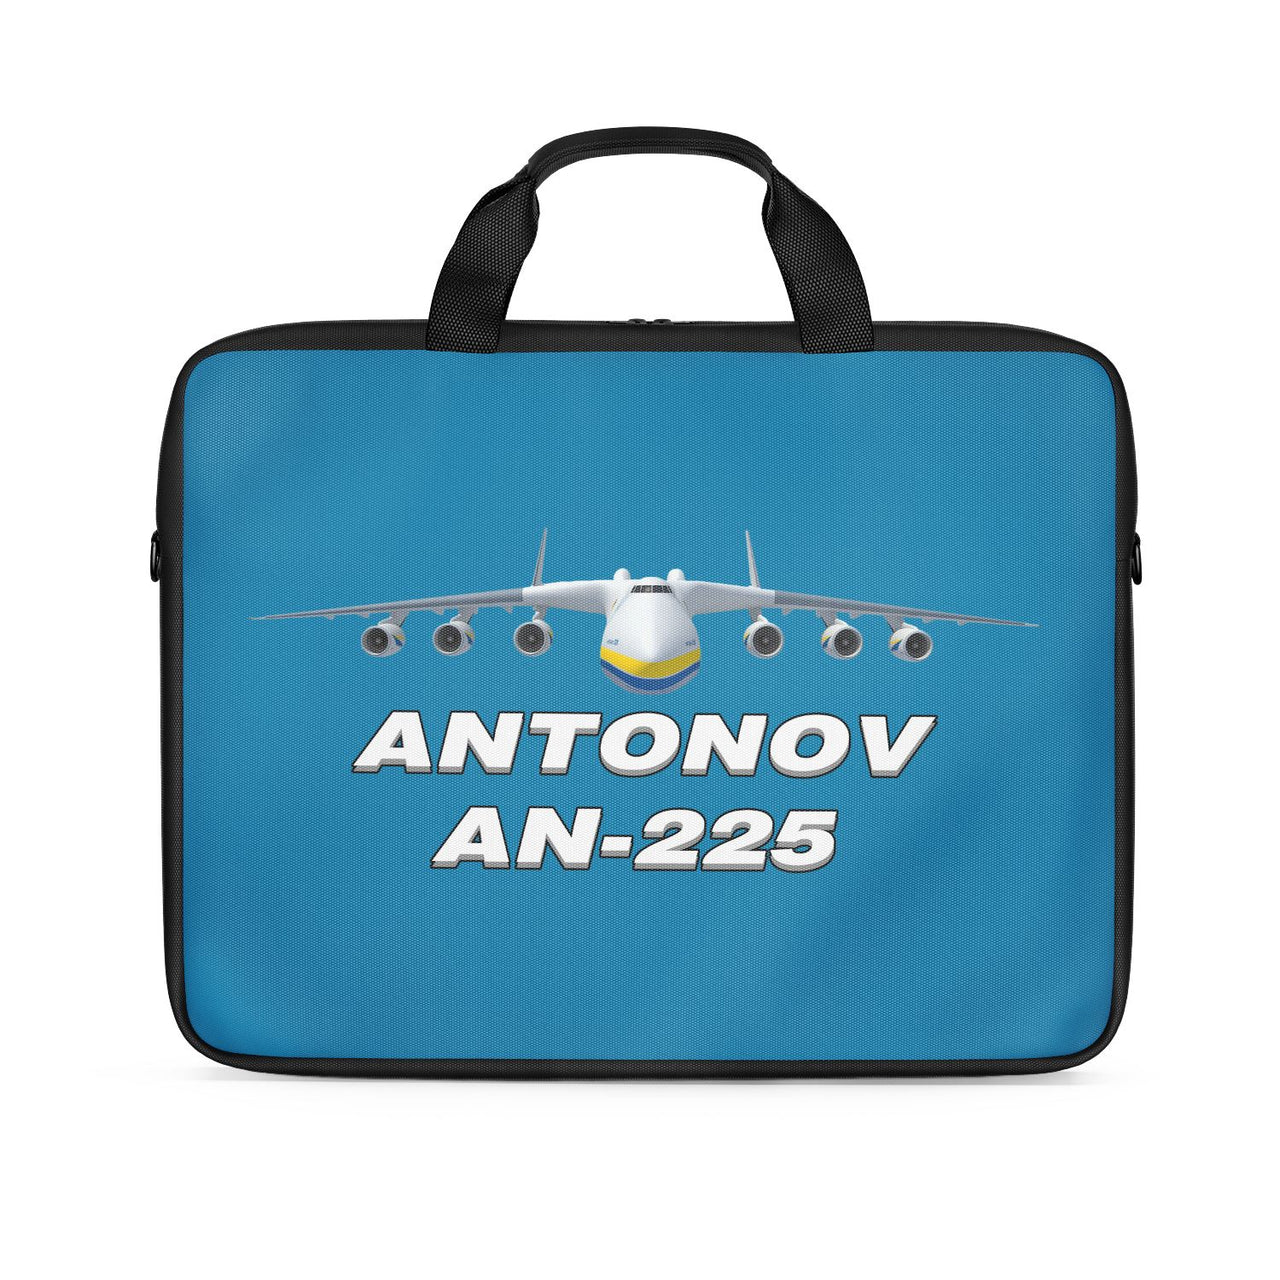 Antonov AN-225 (16) Designed Laptop & Tablet Bags